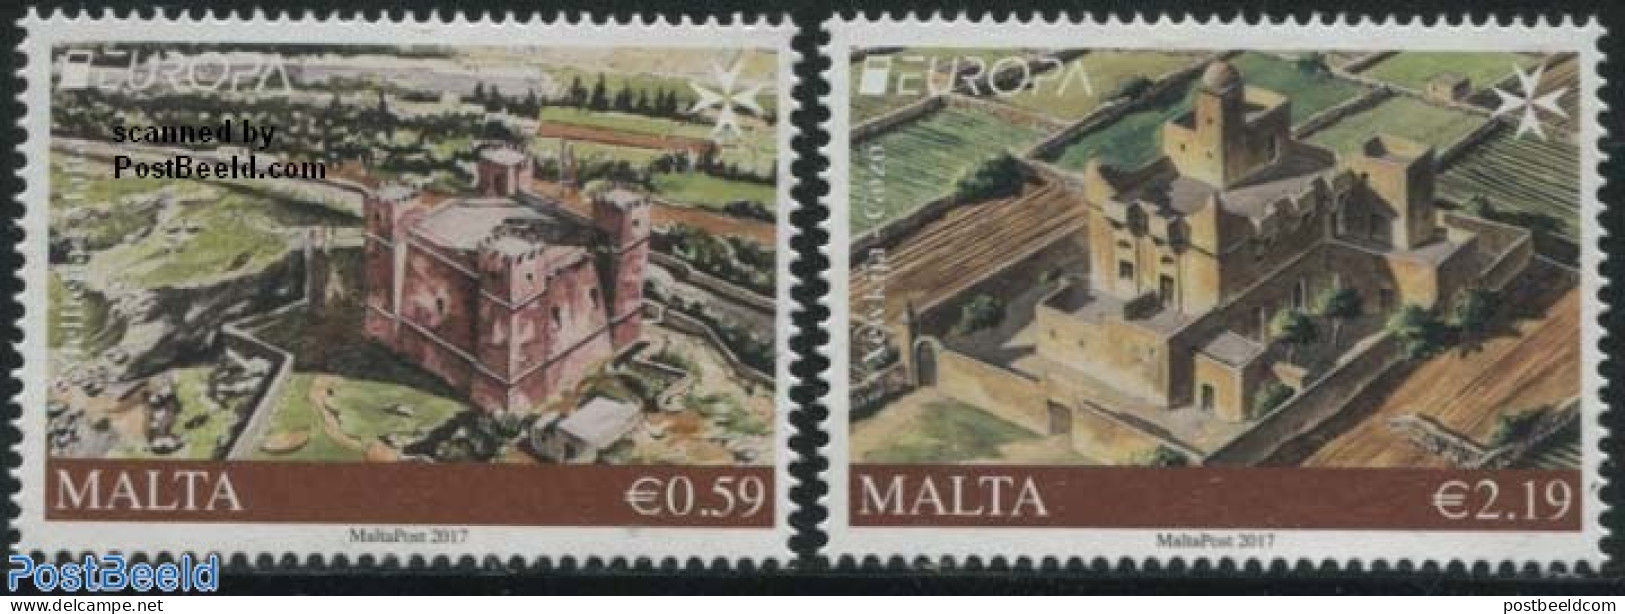 Malta 2017 Europa, Castles 2v, Mint NH, History - Europa (cept) - Art - Castles & Fortifications - Castelli